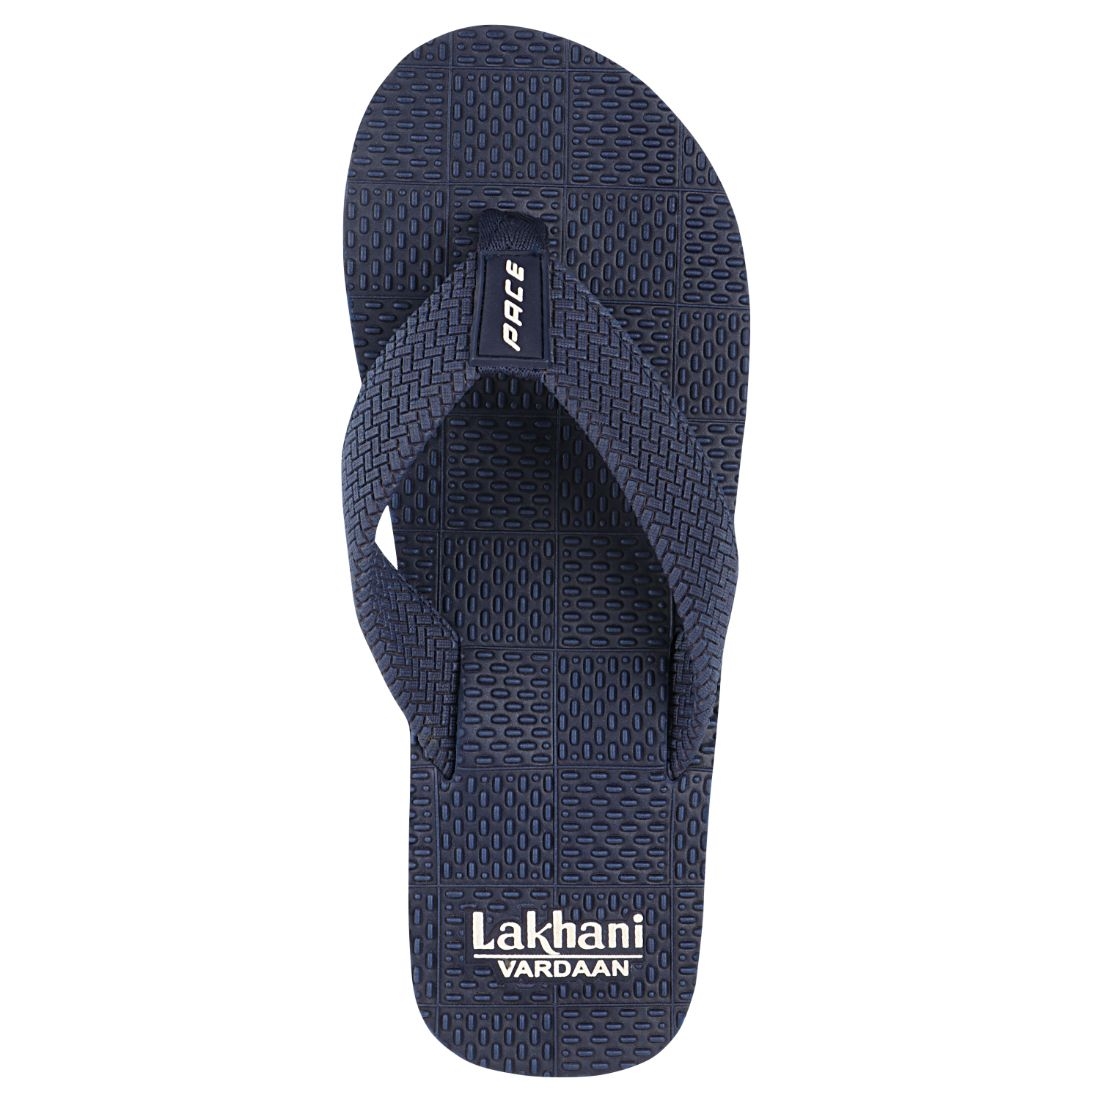 Lakhani Slippers - Lakhani Slippers Dealers & Distributors, Suppliers